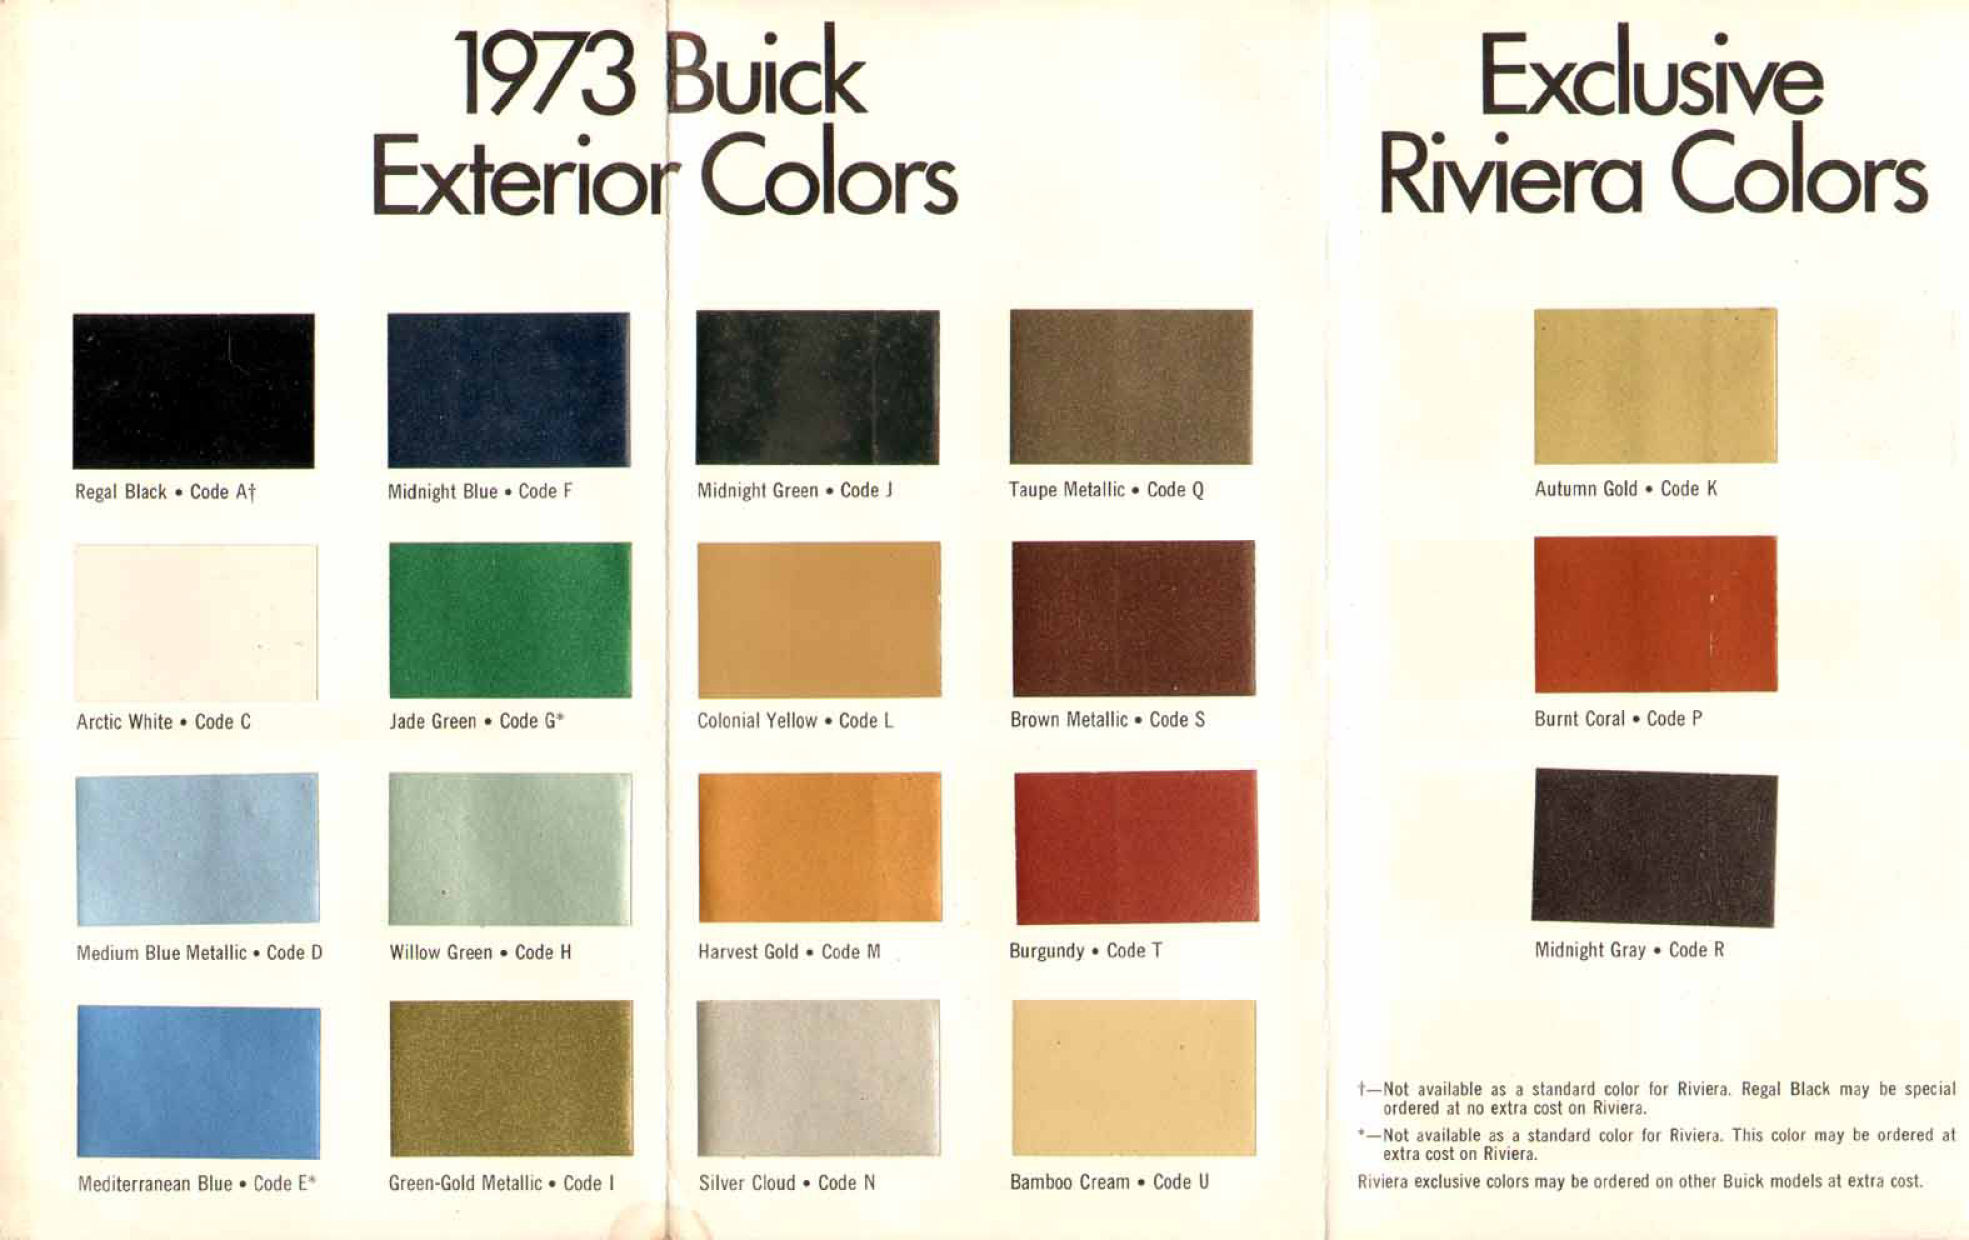 1973 Buick Exterior Colors Chart-02-04